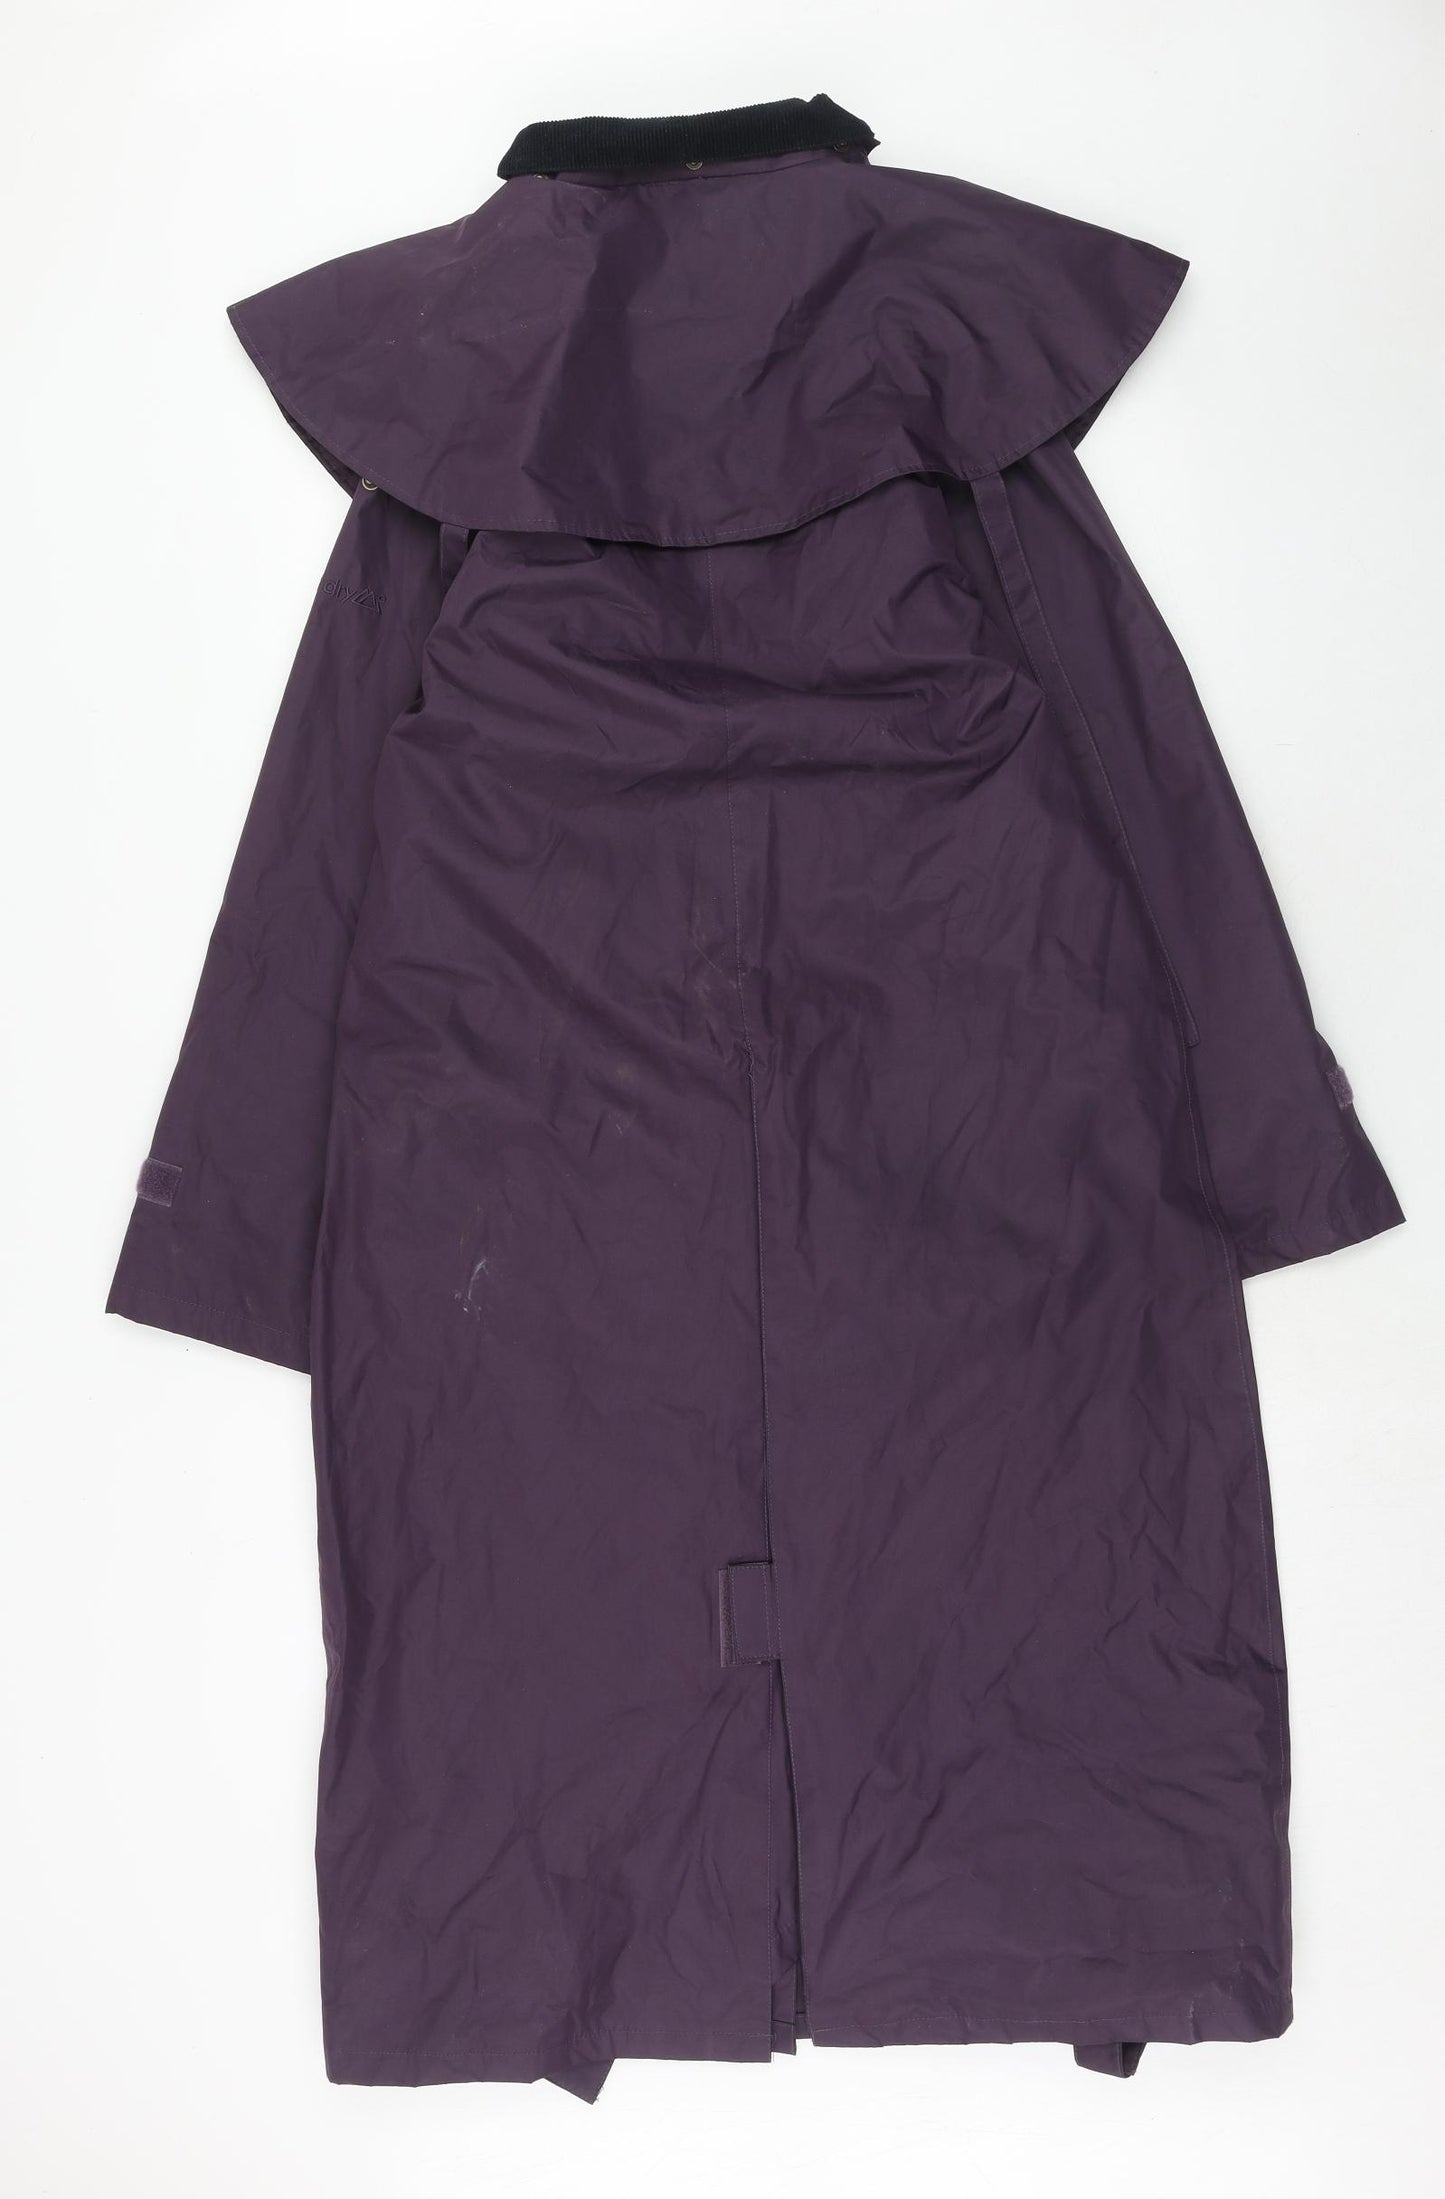 Target Dry Womens Purple Rain Coat Coat Size 10 Zip